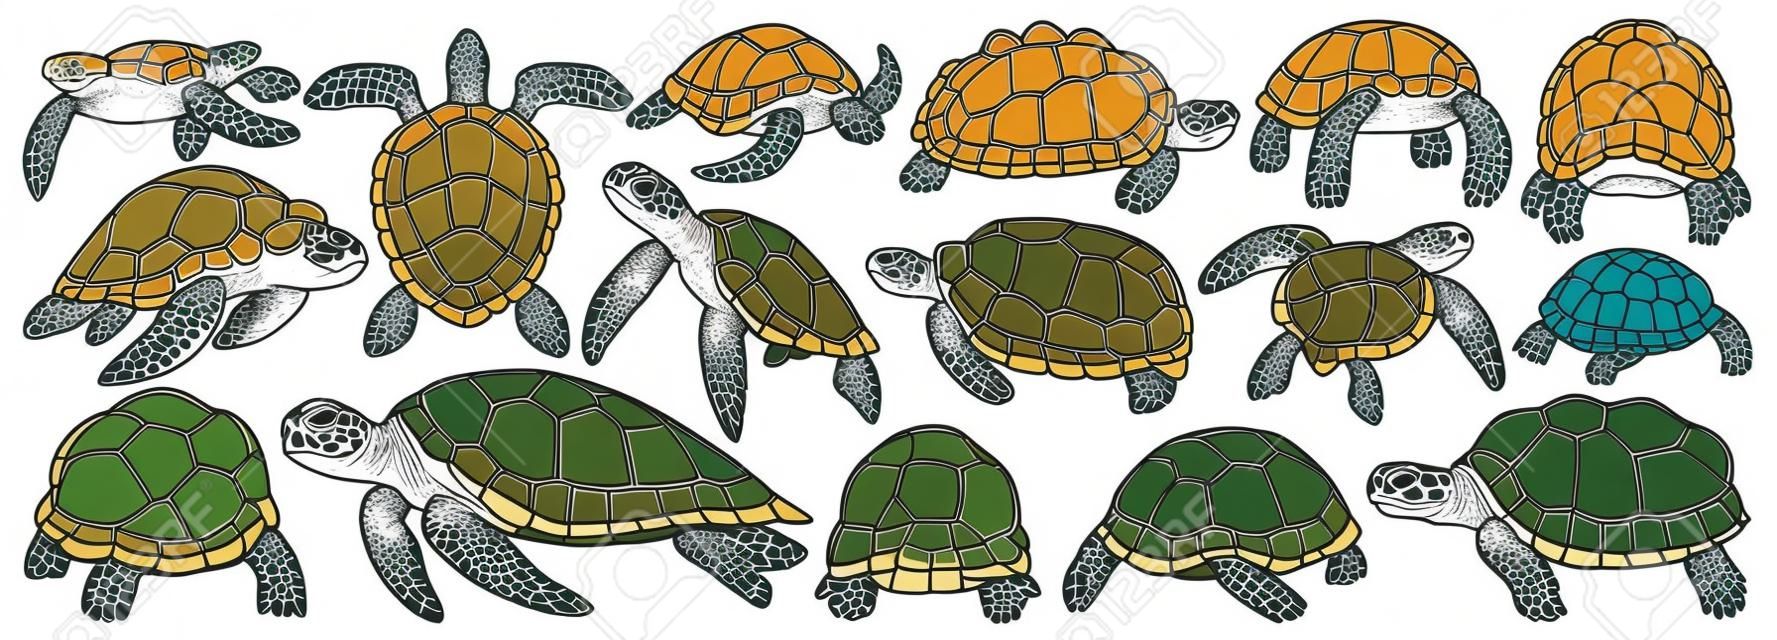 Sea turtle vector cartoon set icon. Vector illustration tortoise on white background. Isolate cartoon set icons sea turtle.